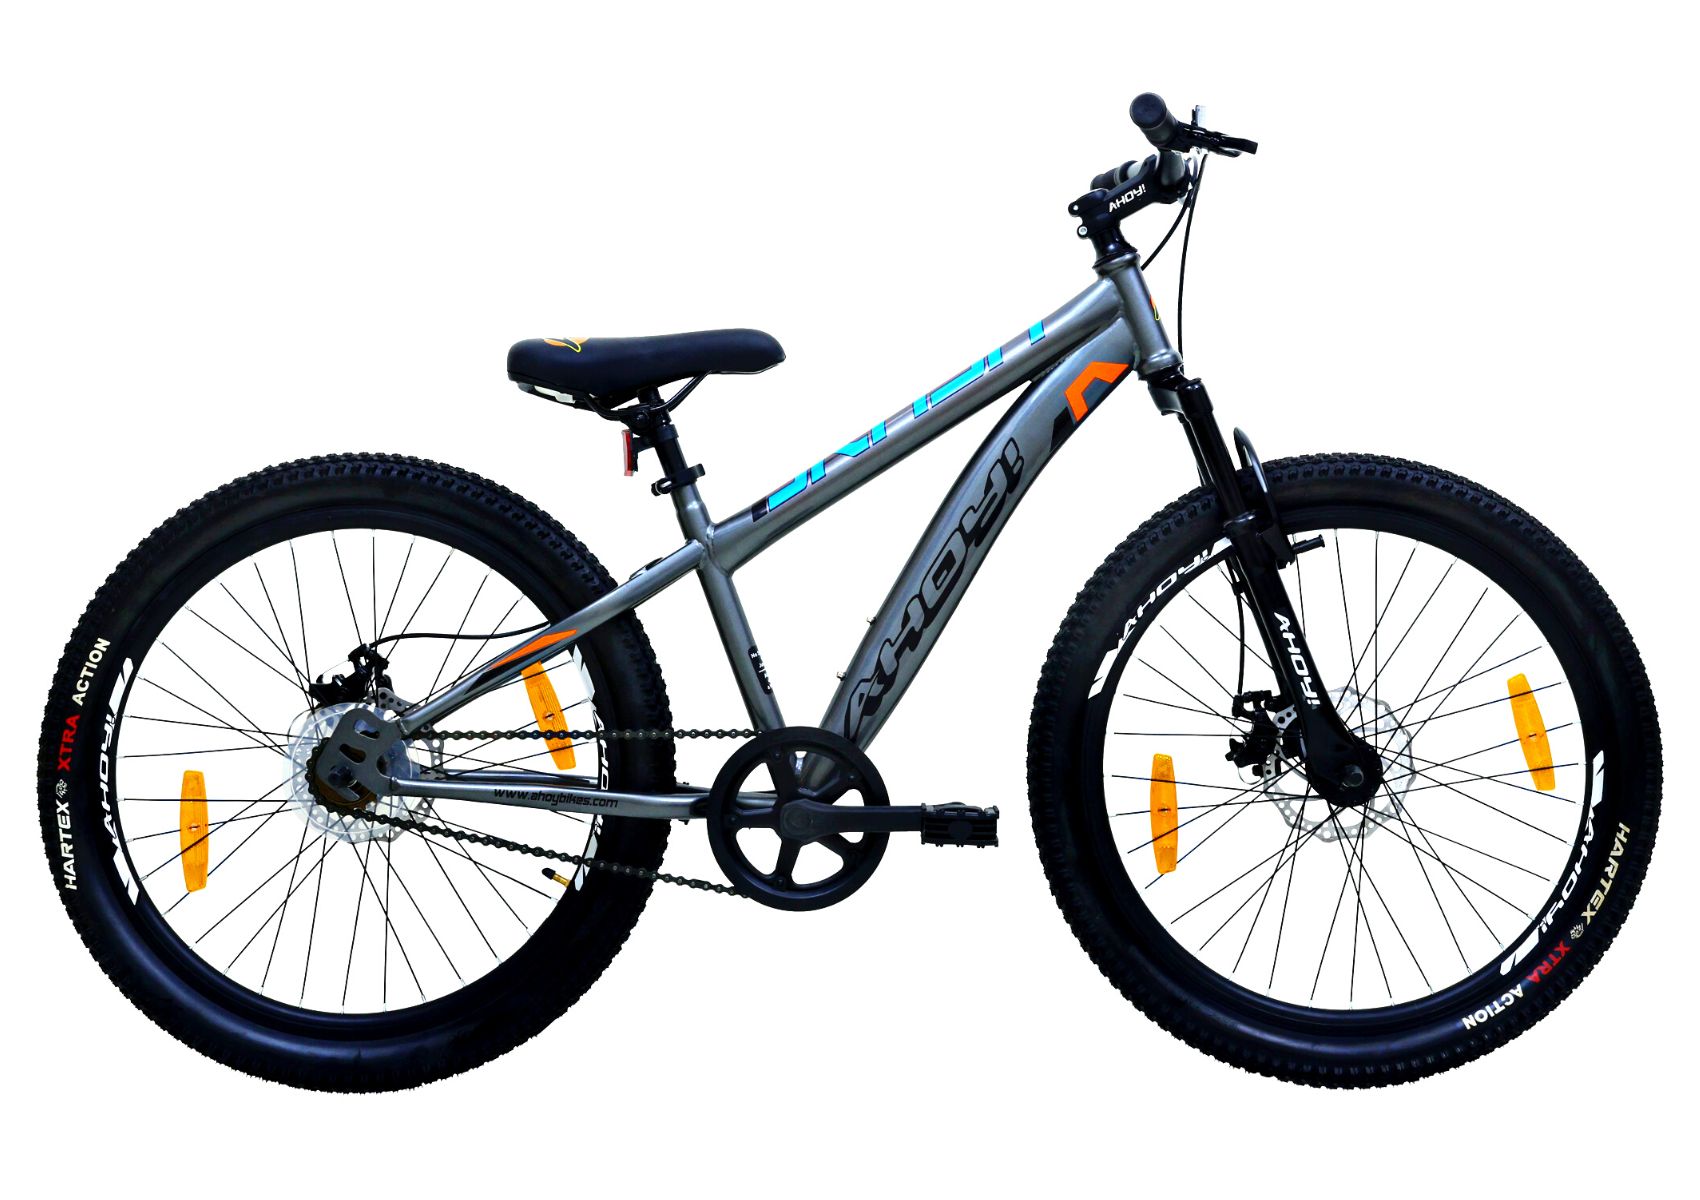 Brash Non Gear Cycle 24T | Buy Grey Non Gear Bike for Men